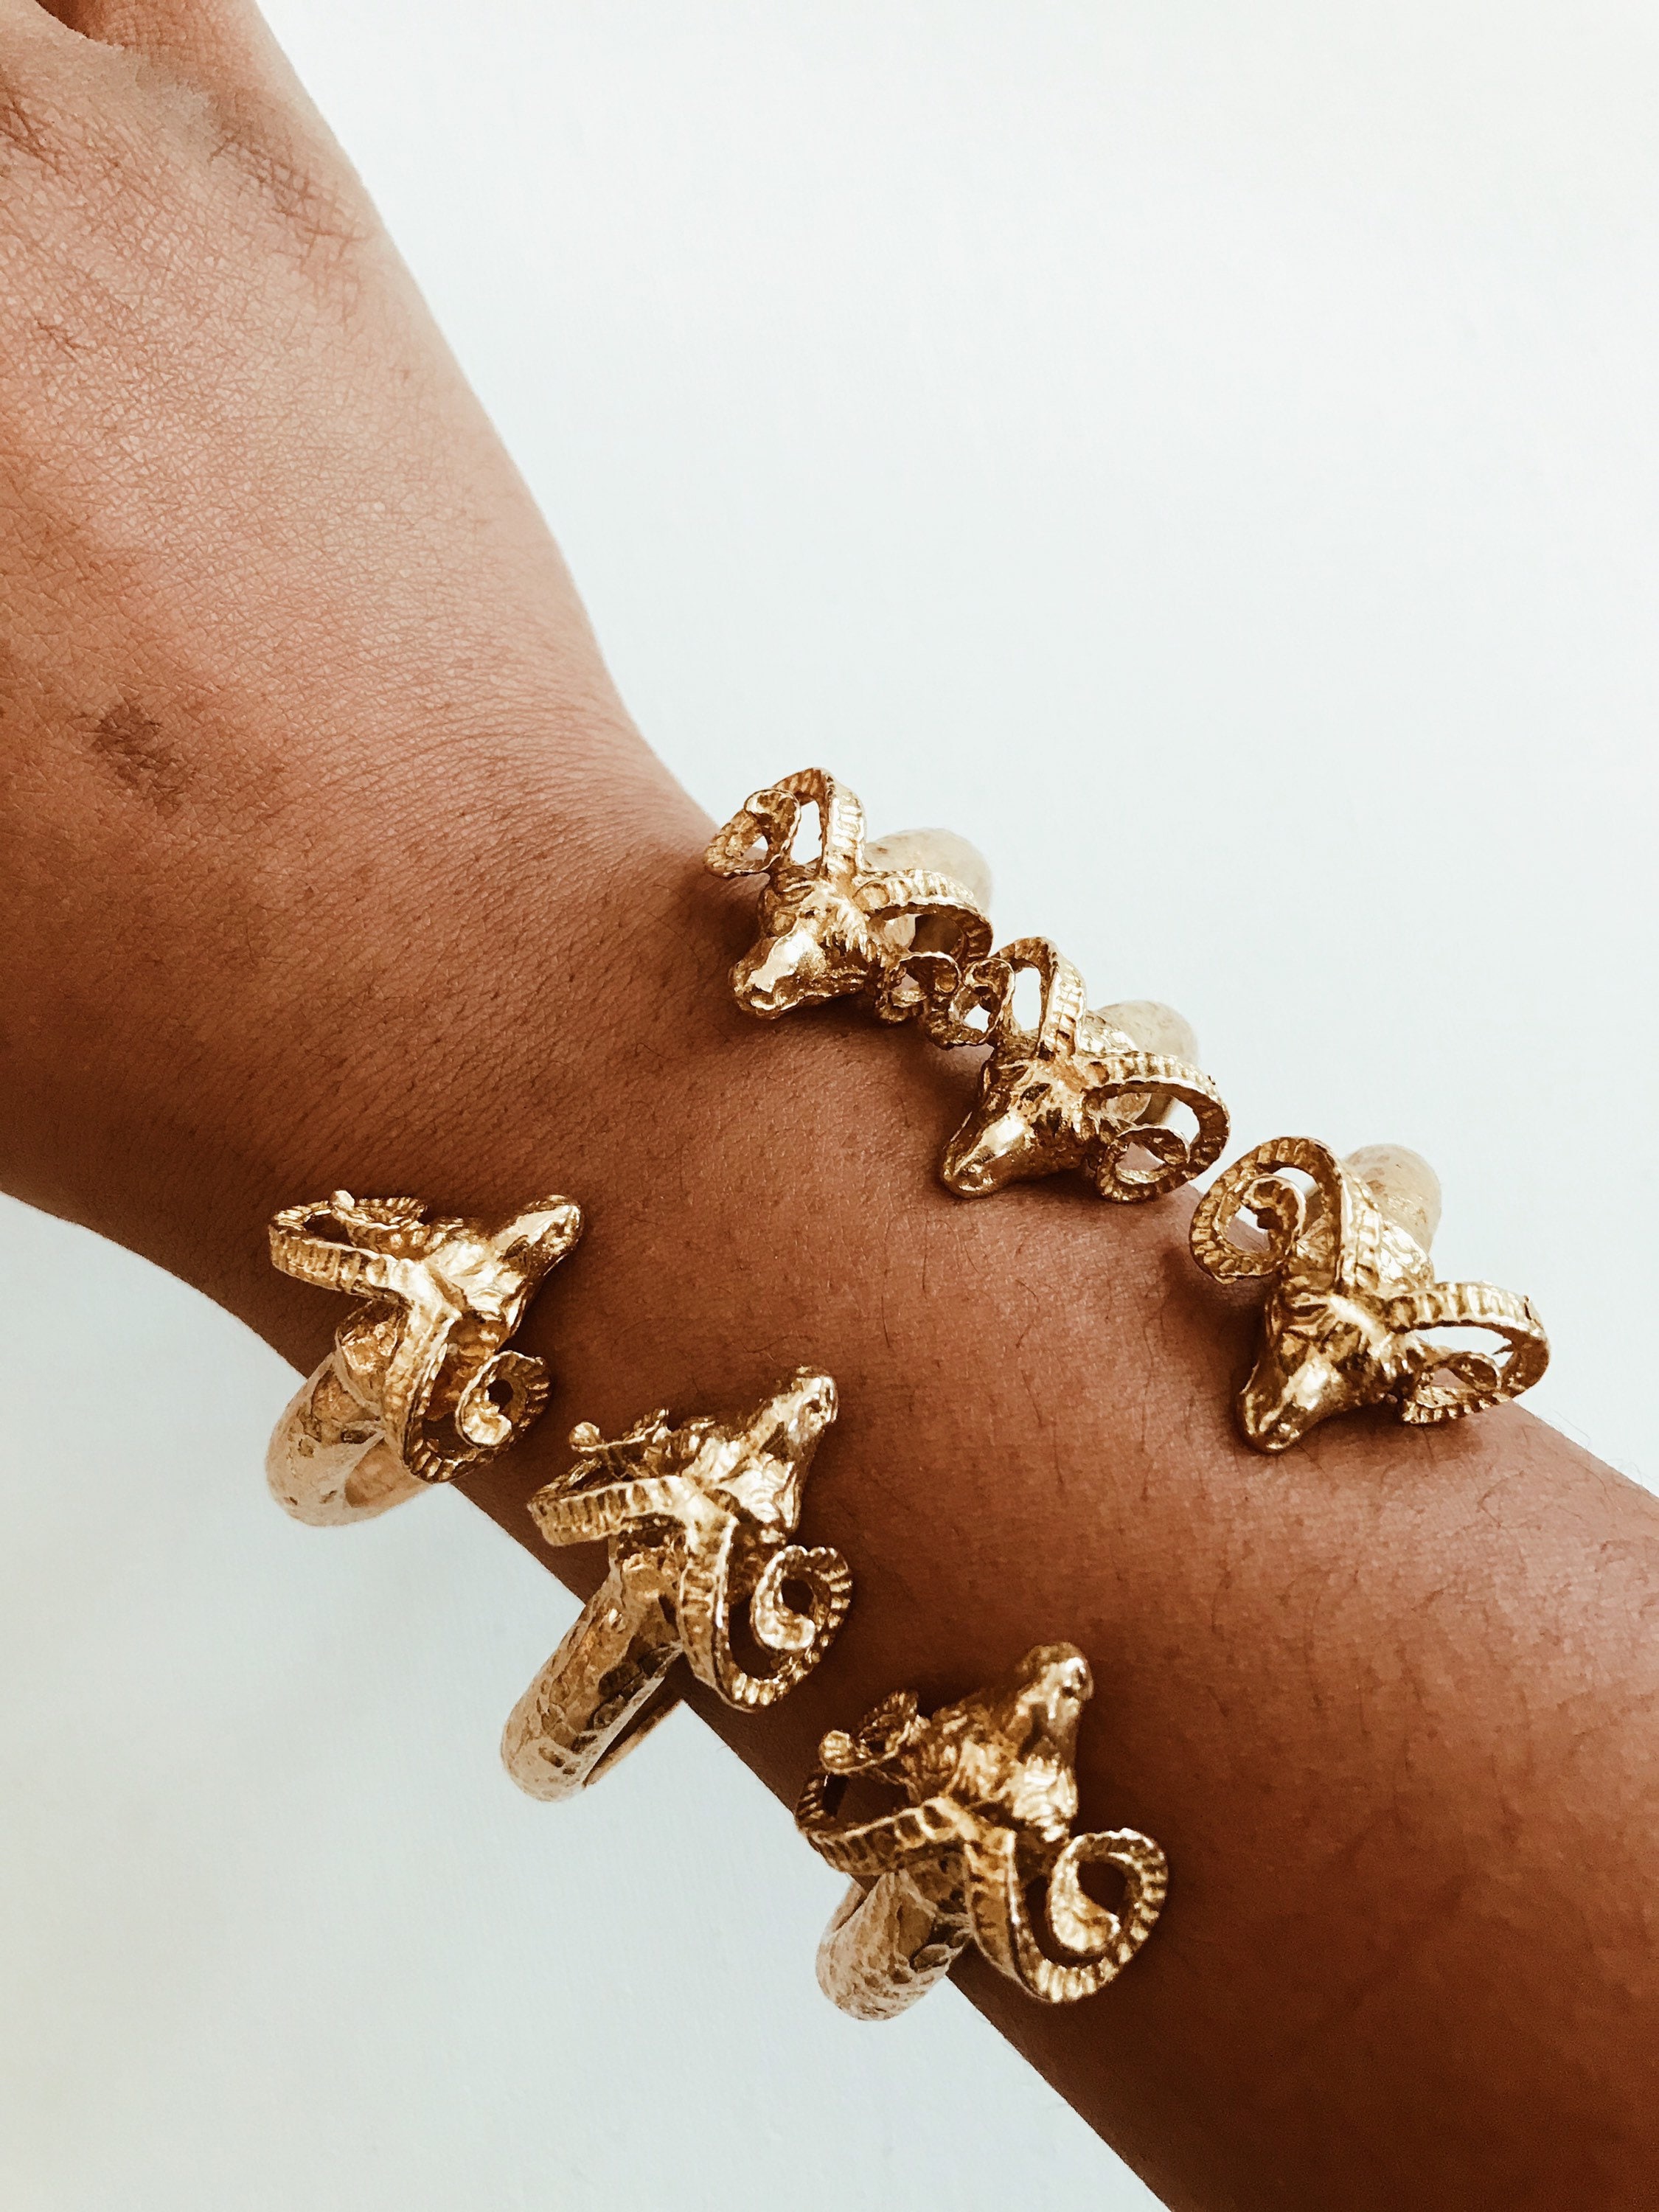 Mythical Ram Cuff // Brass Textured Bracelet, African Jewelry, Egyptian Gold Bangle, Bracelet